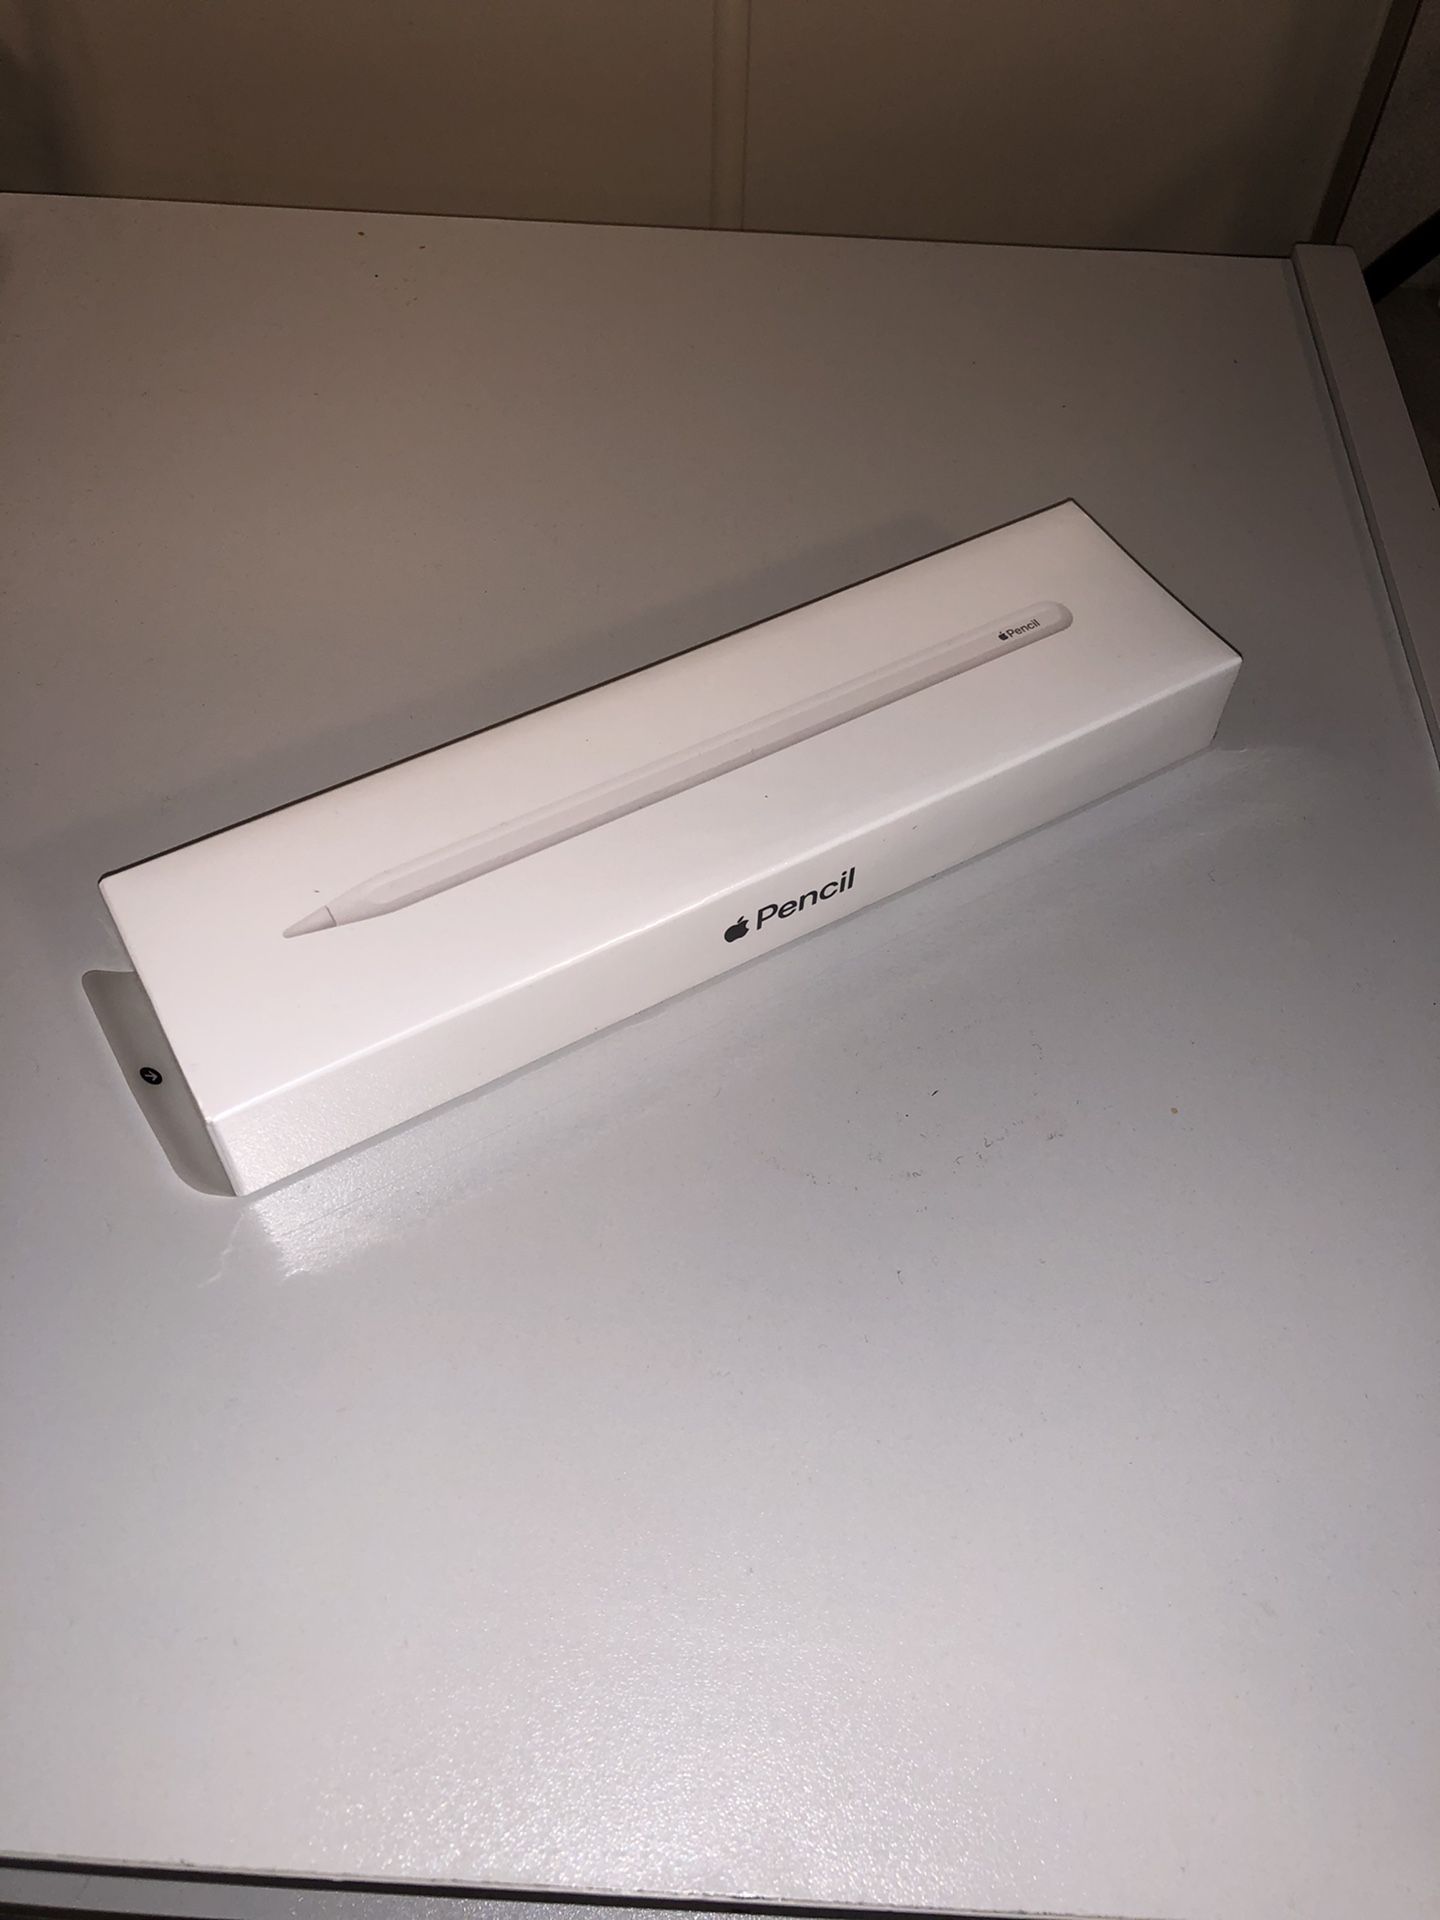 New Apple Pencil 2 sealed